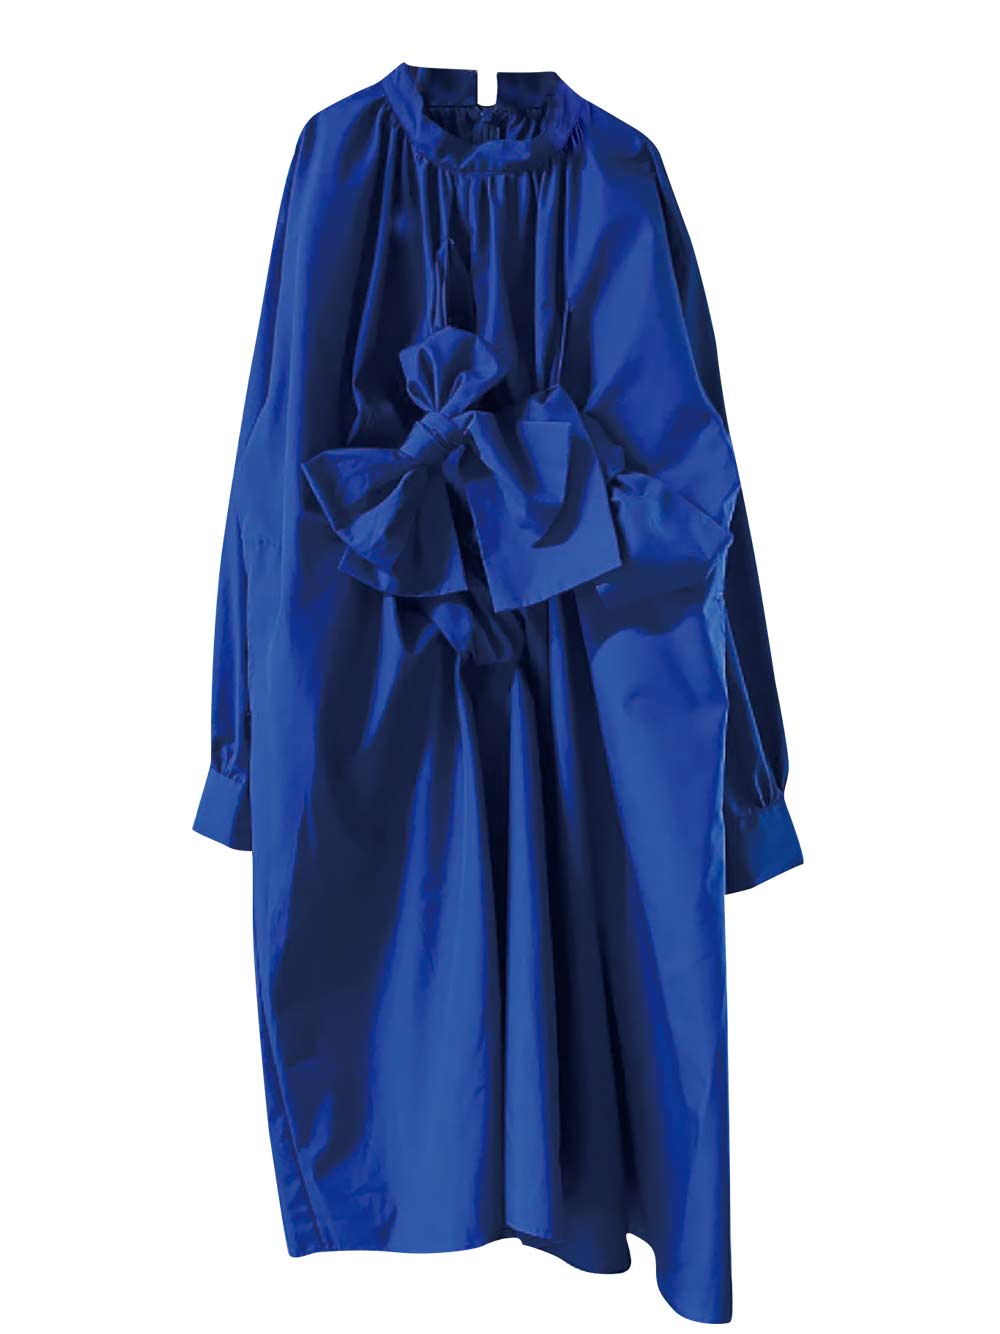 PREORDER: Blue Bow Dress